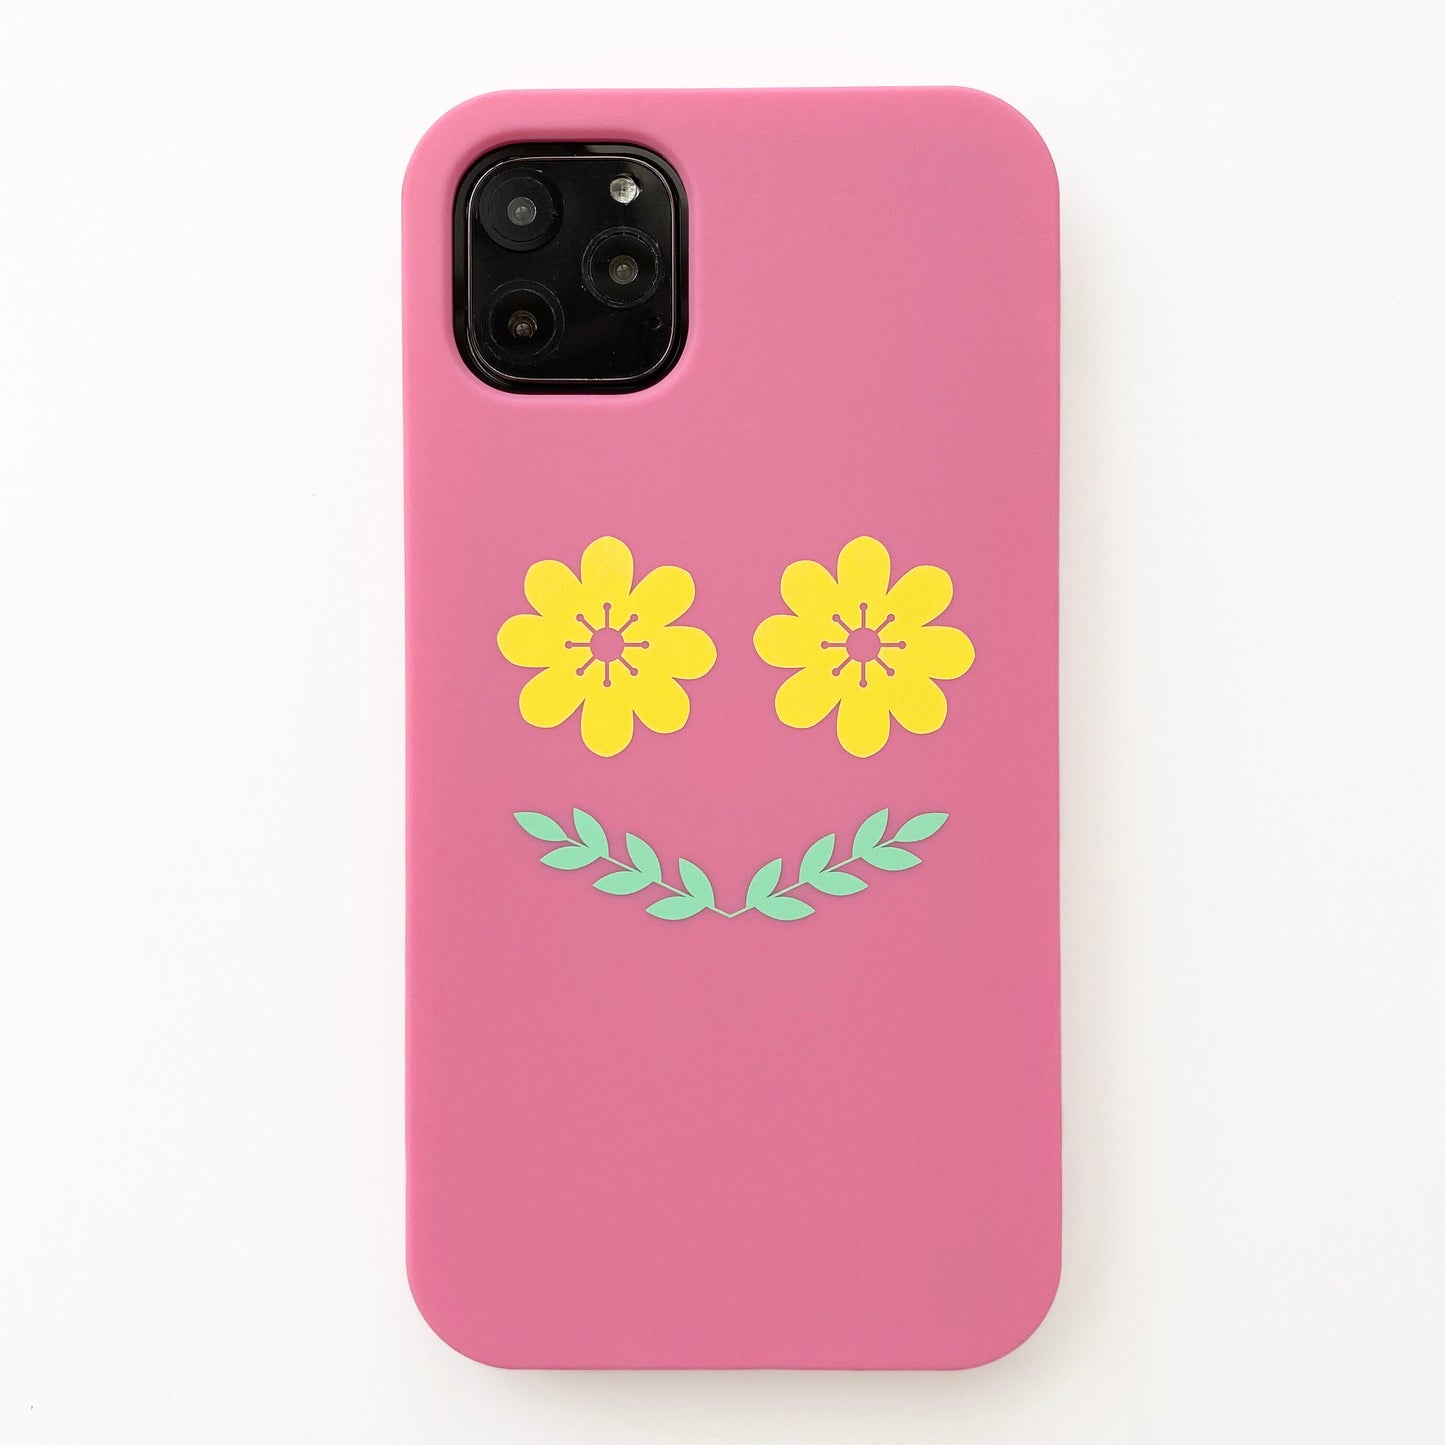 iPhone 11 Pro Max Simple Case - Flower Smile